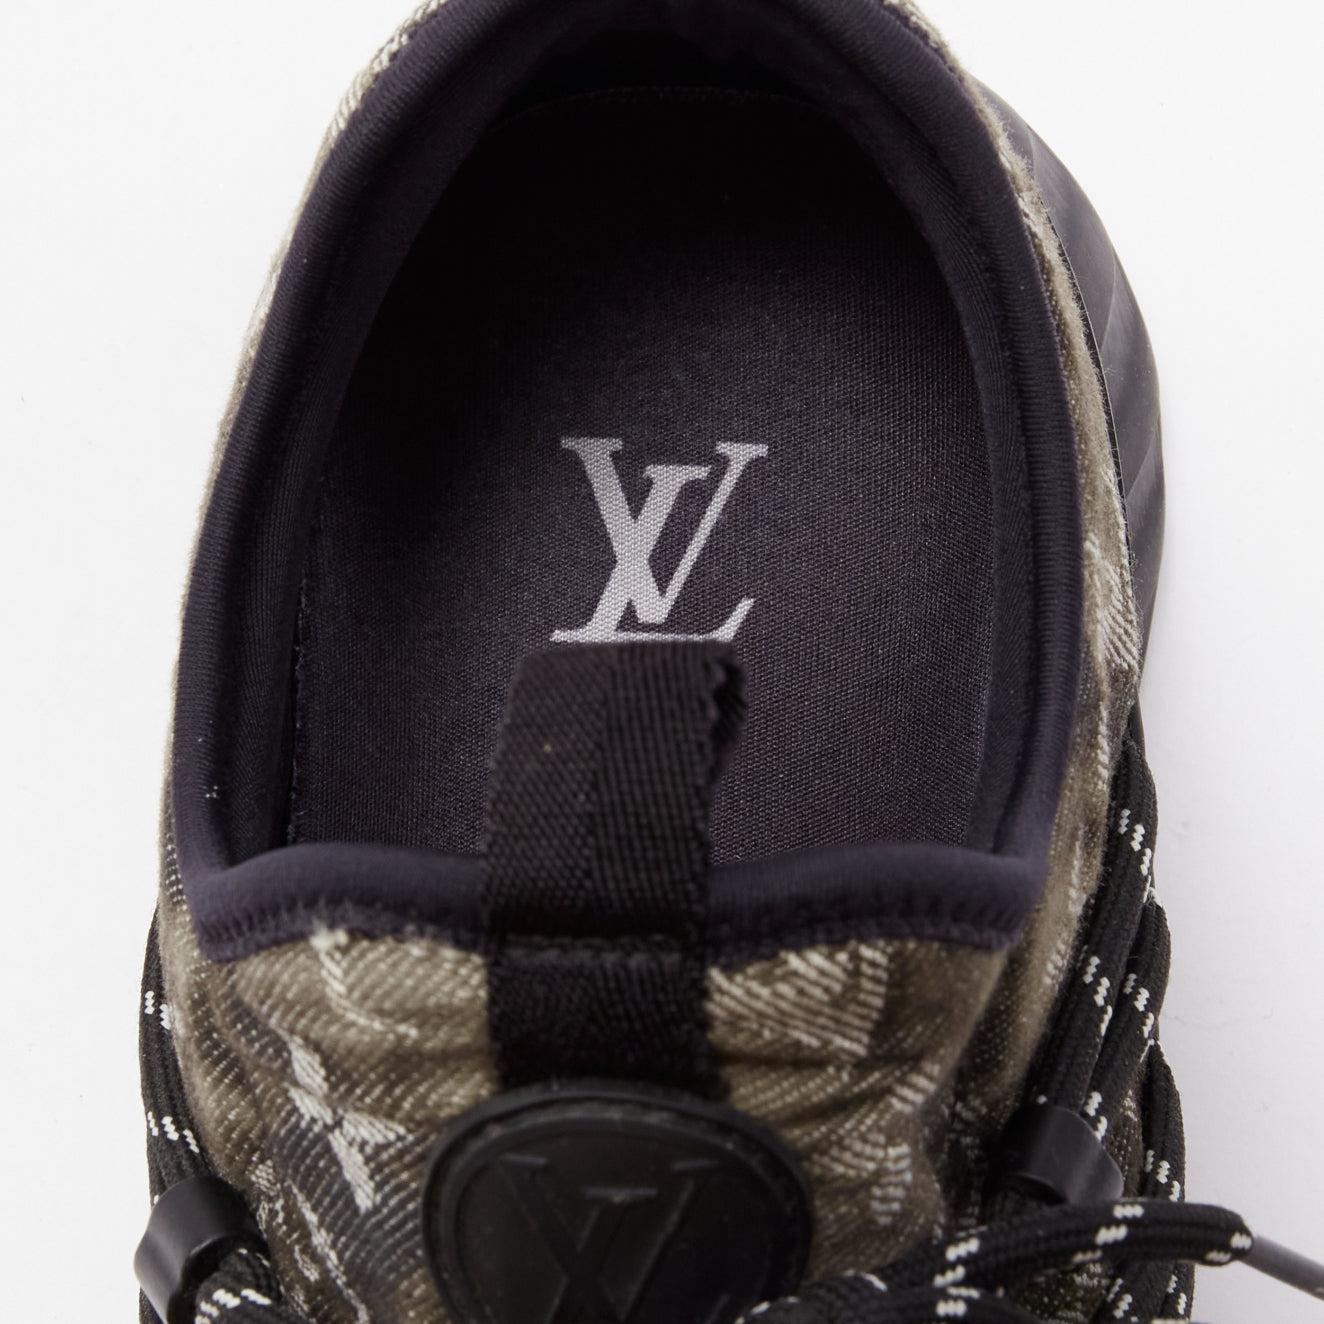 LOUIS VUITTON Fastlane LV monogram laced fabric low top sneakers UK9 EU43 4